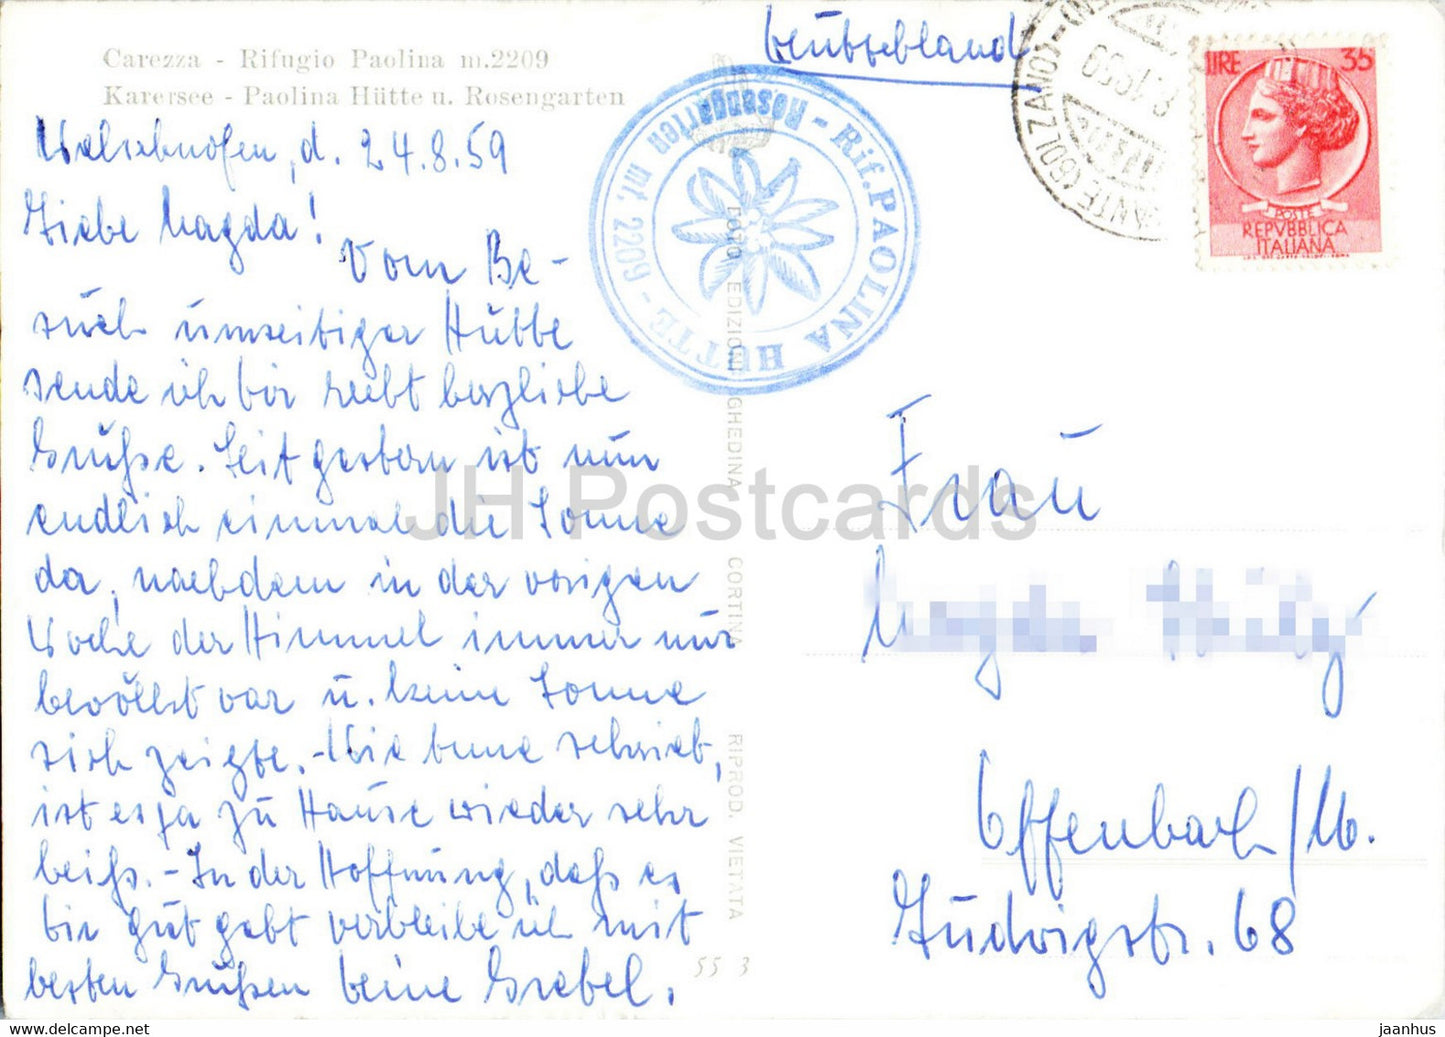 Carezza - Rifugio Paolina - Karersee - Paolina Hutte u Rosengarten - carte postale ancienne - 1959 - Italie - utilisé